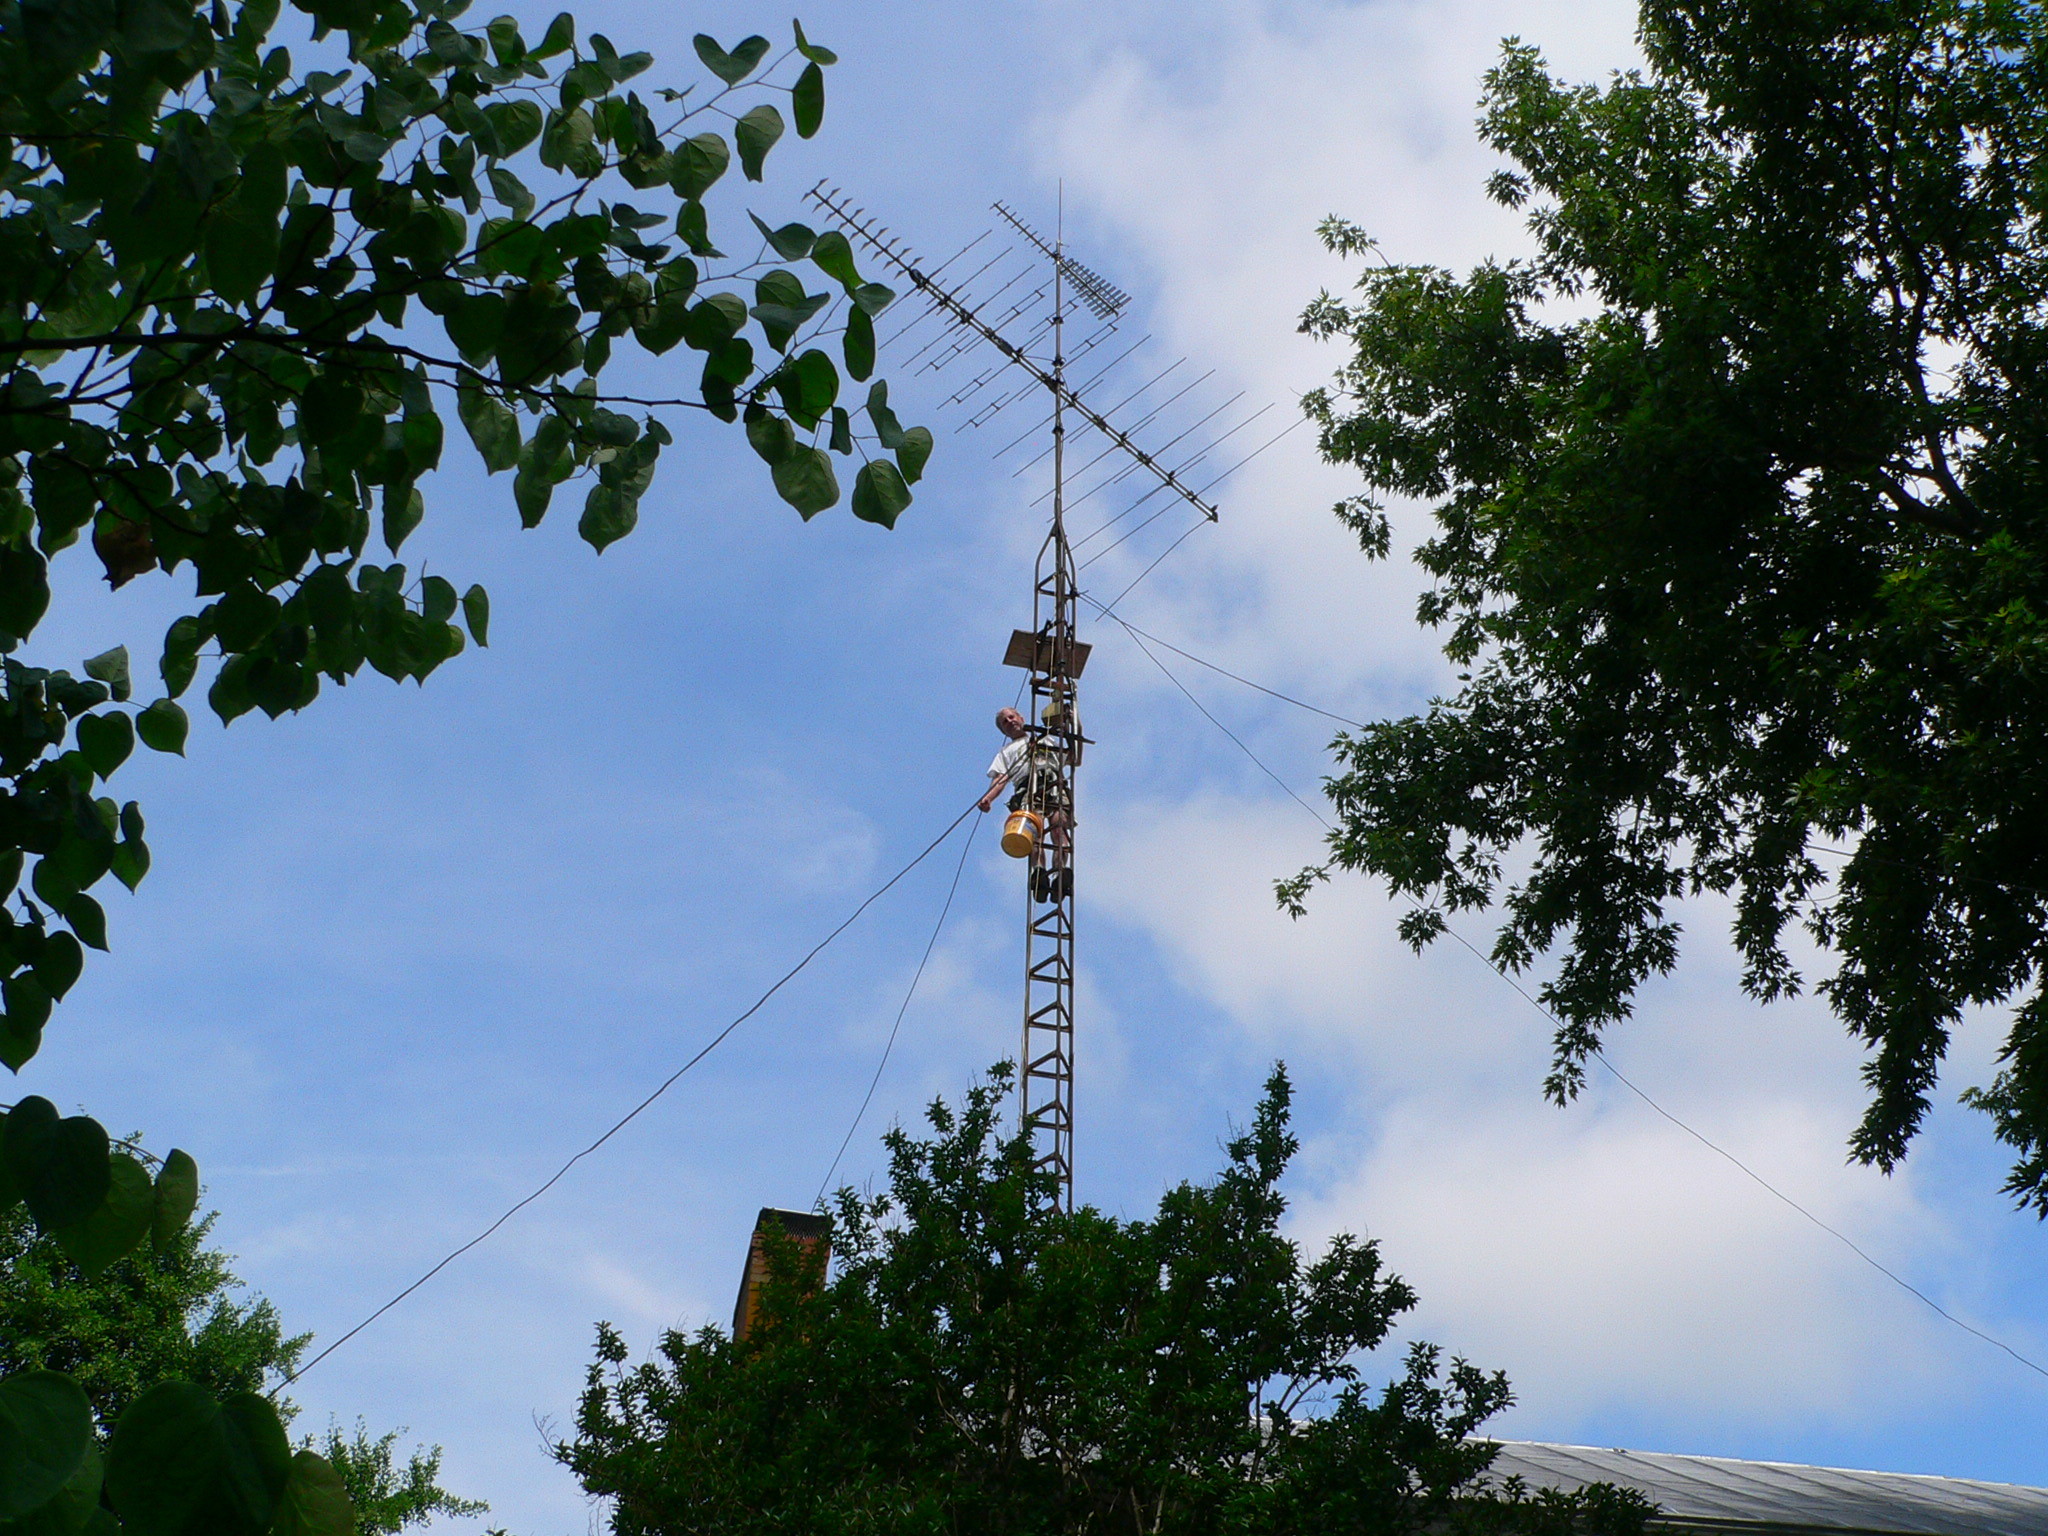 Jim Hale on Ward Kipp's 50' antenna tower